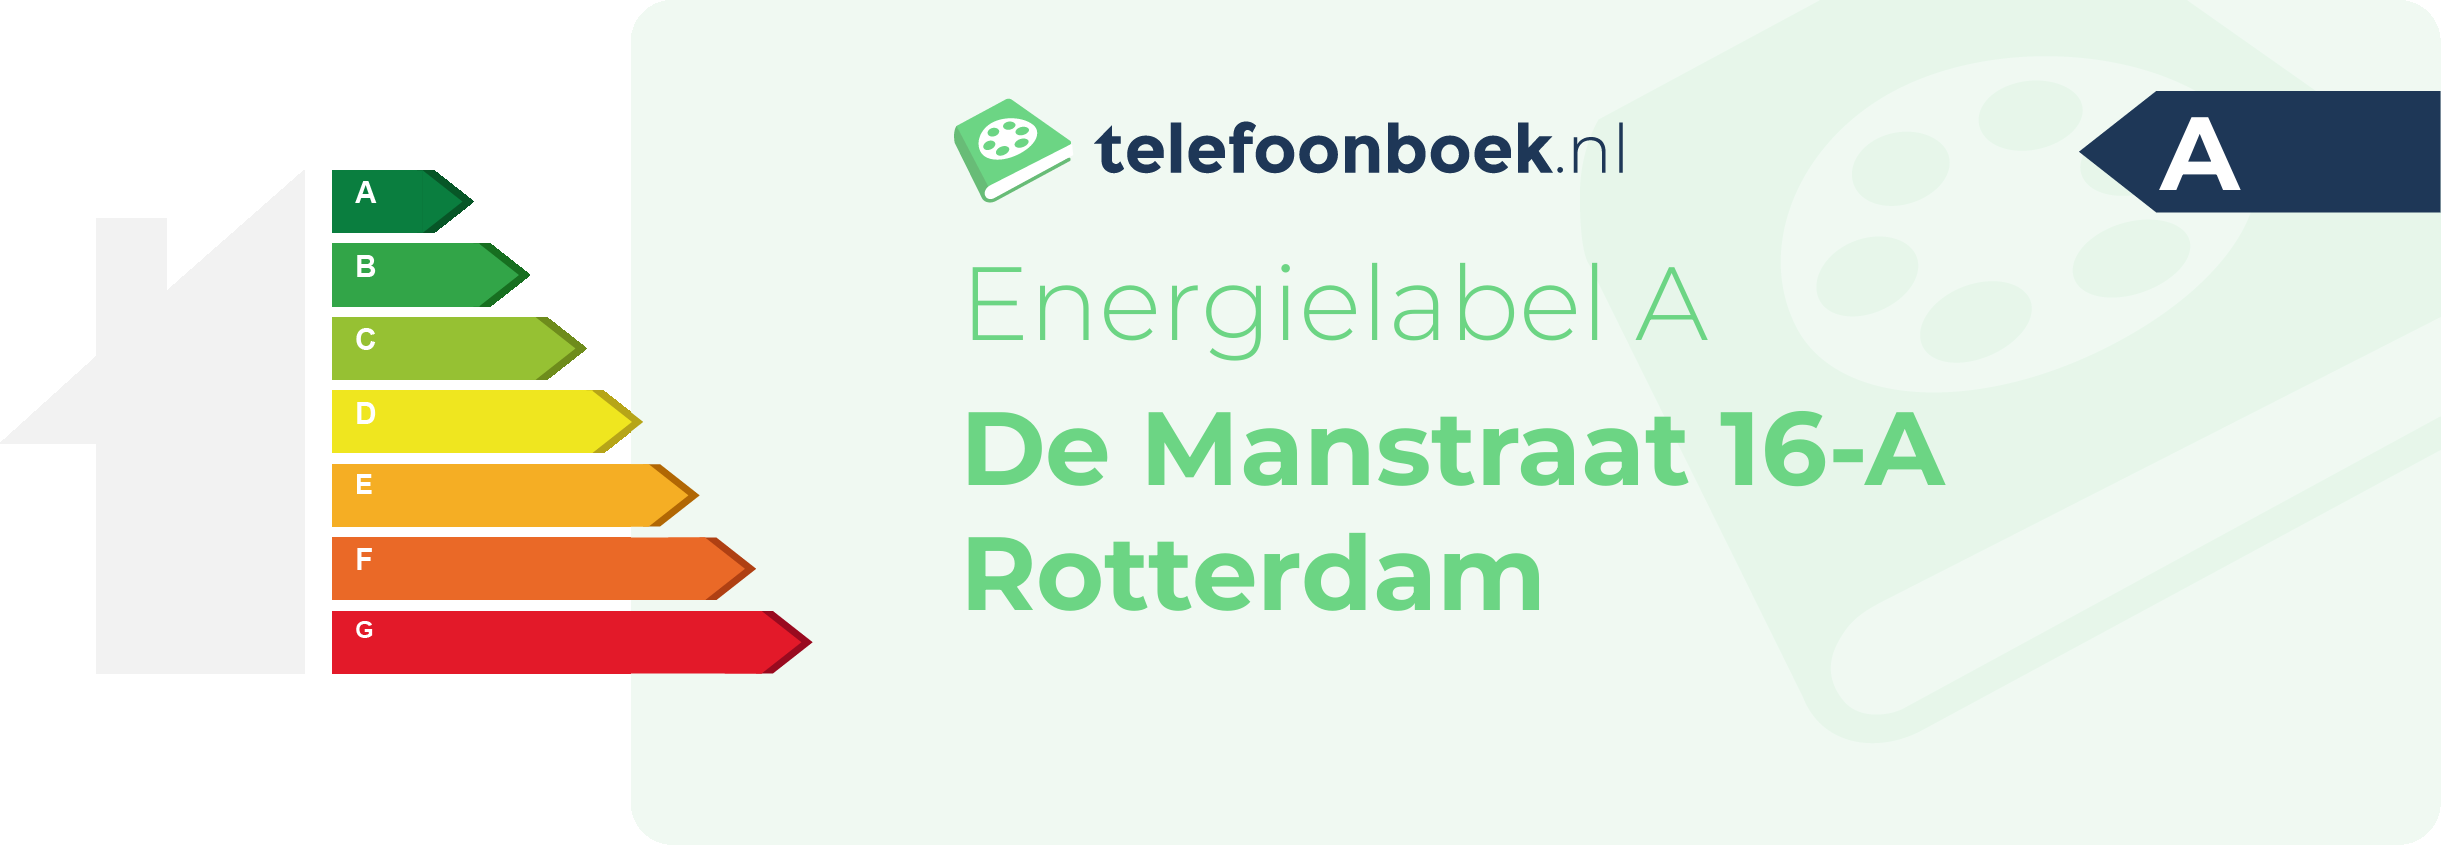 Energielabel De Manstraat 16-A Rotterdam